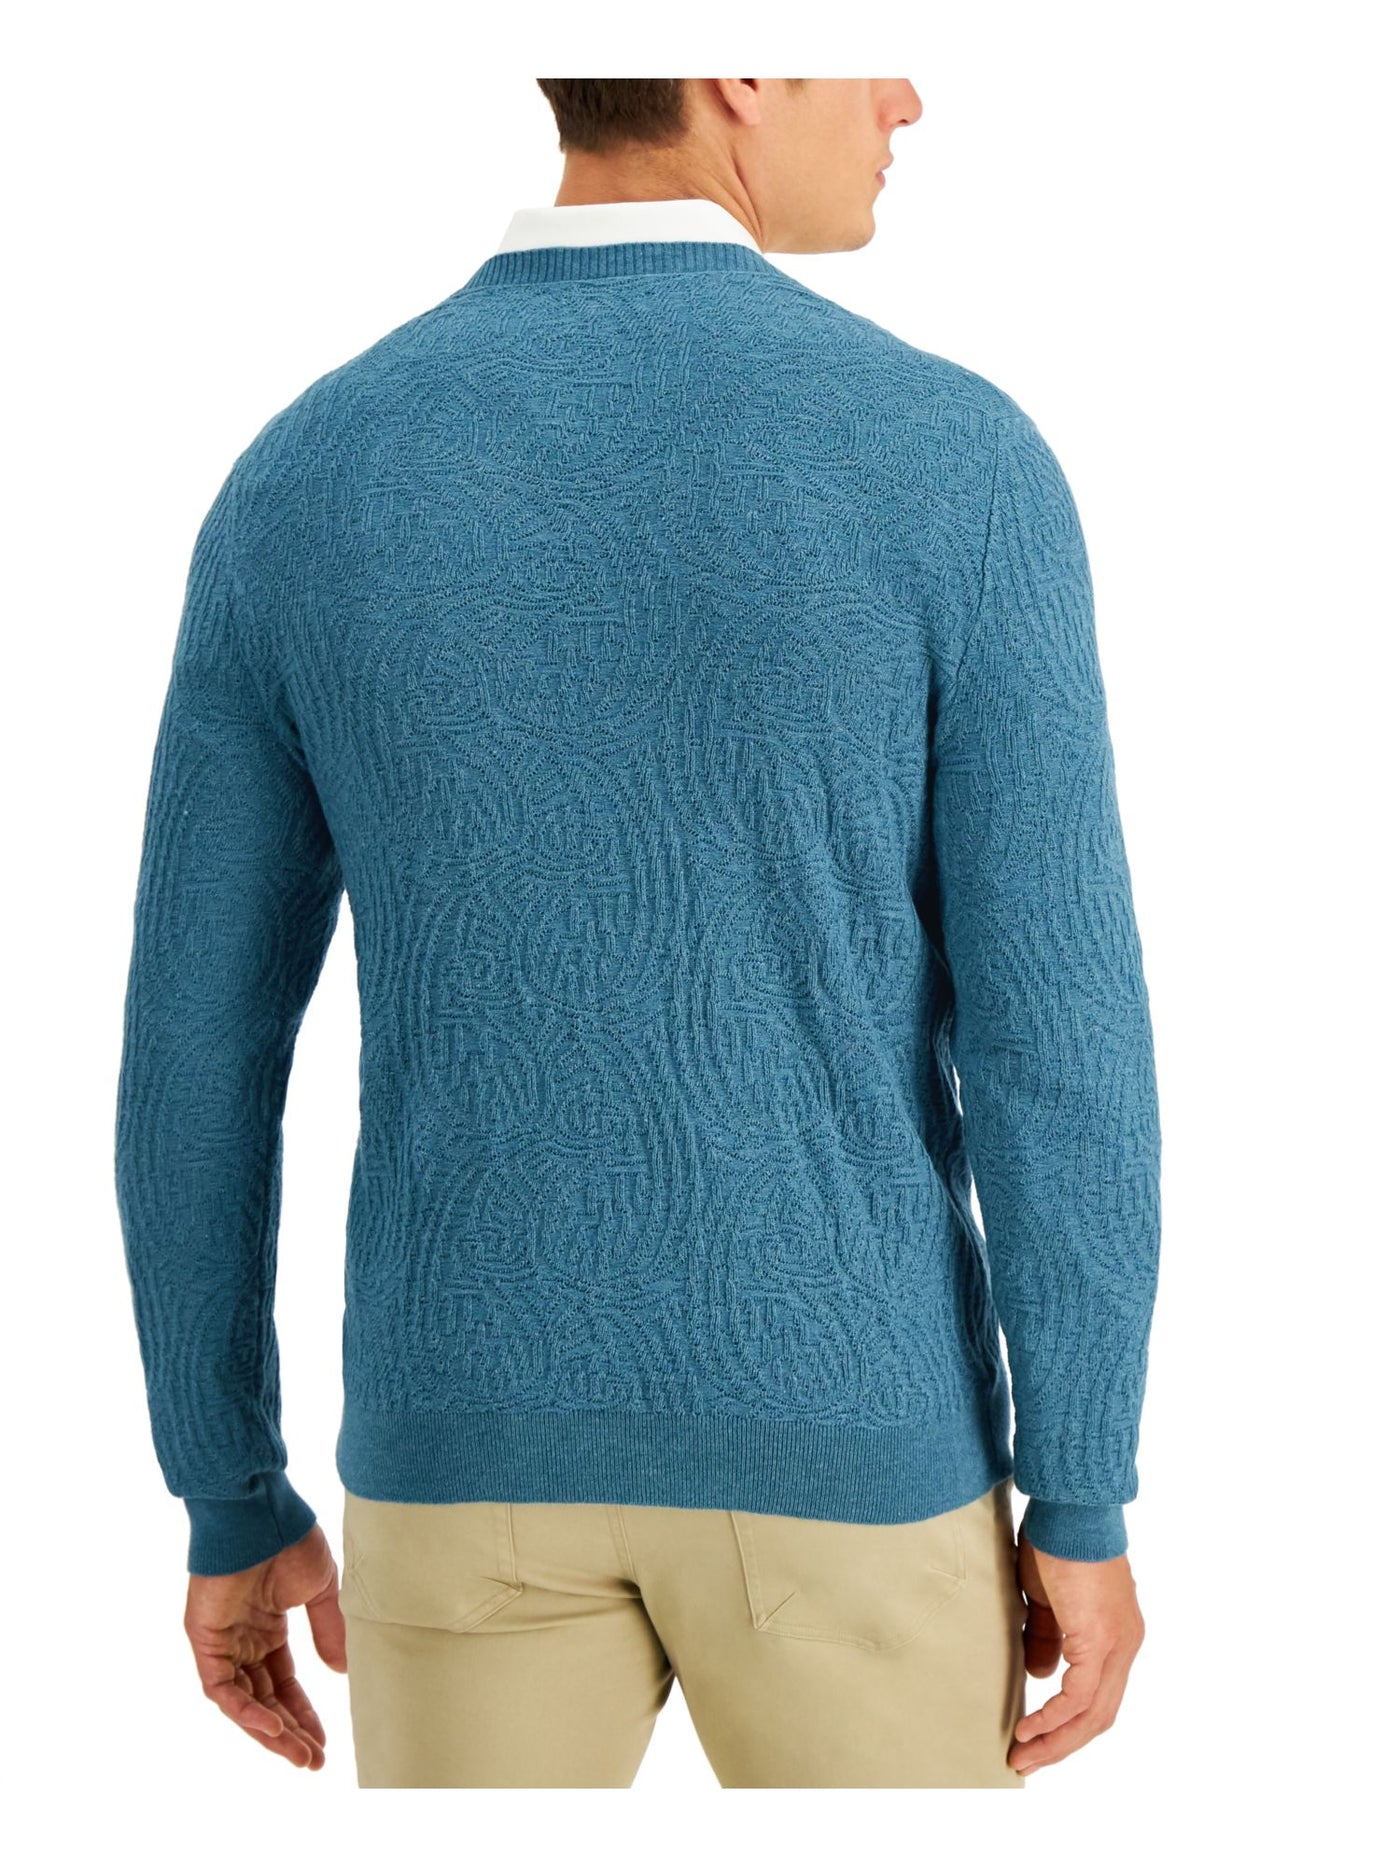 TASSO ELBA Mens Teal Crew Neck Pullover Sweater L